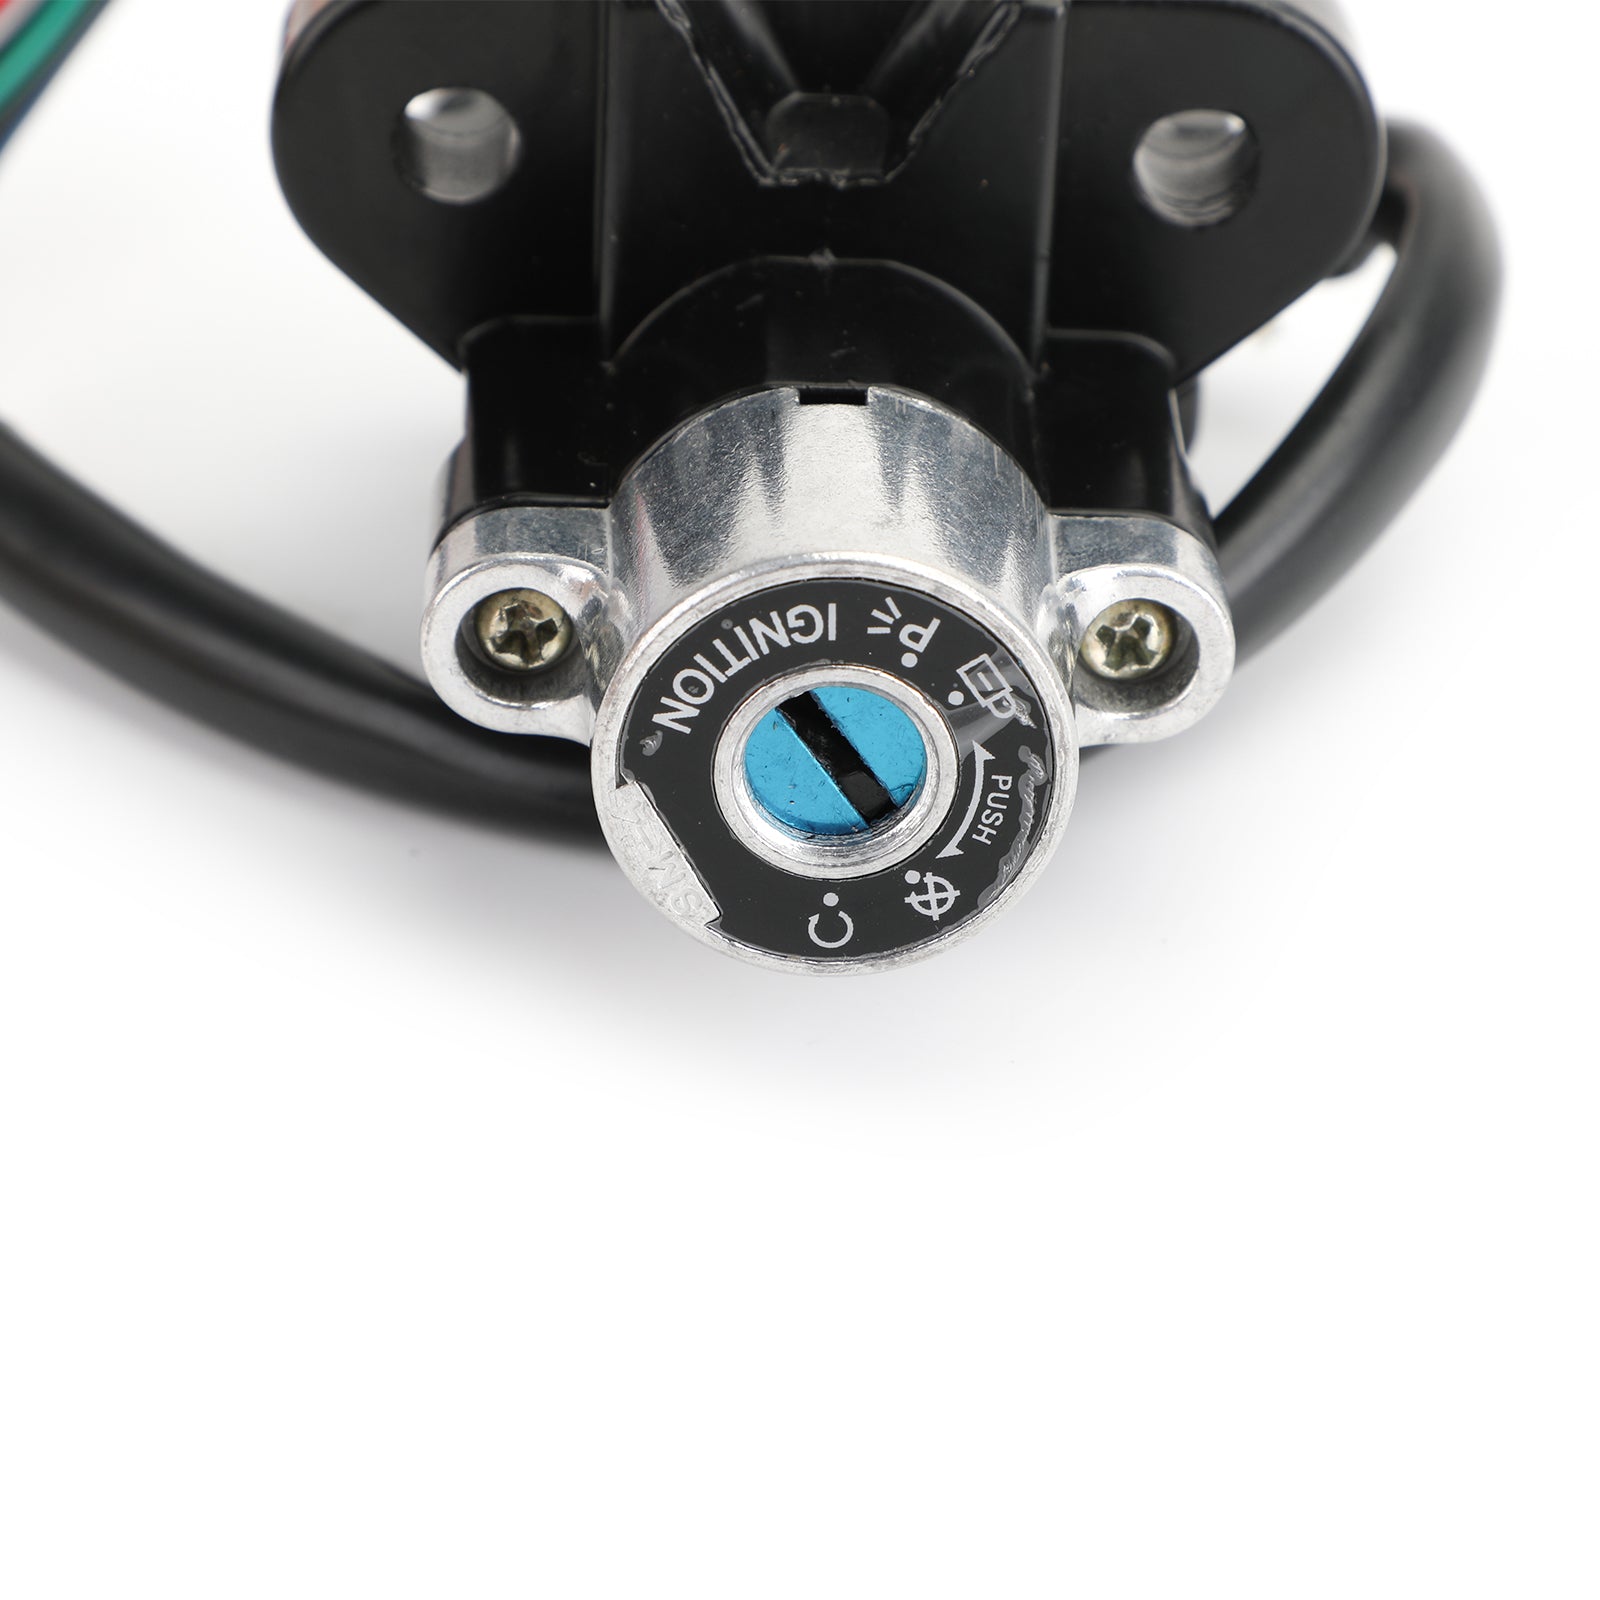 Ignition Switch Fuel Gas Cap Lock Keys For Suzuki GSF1200 GSF1250 Bandit 06-11